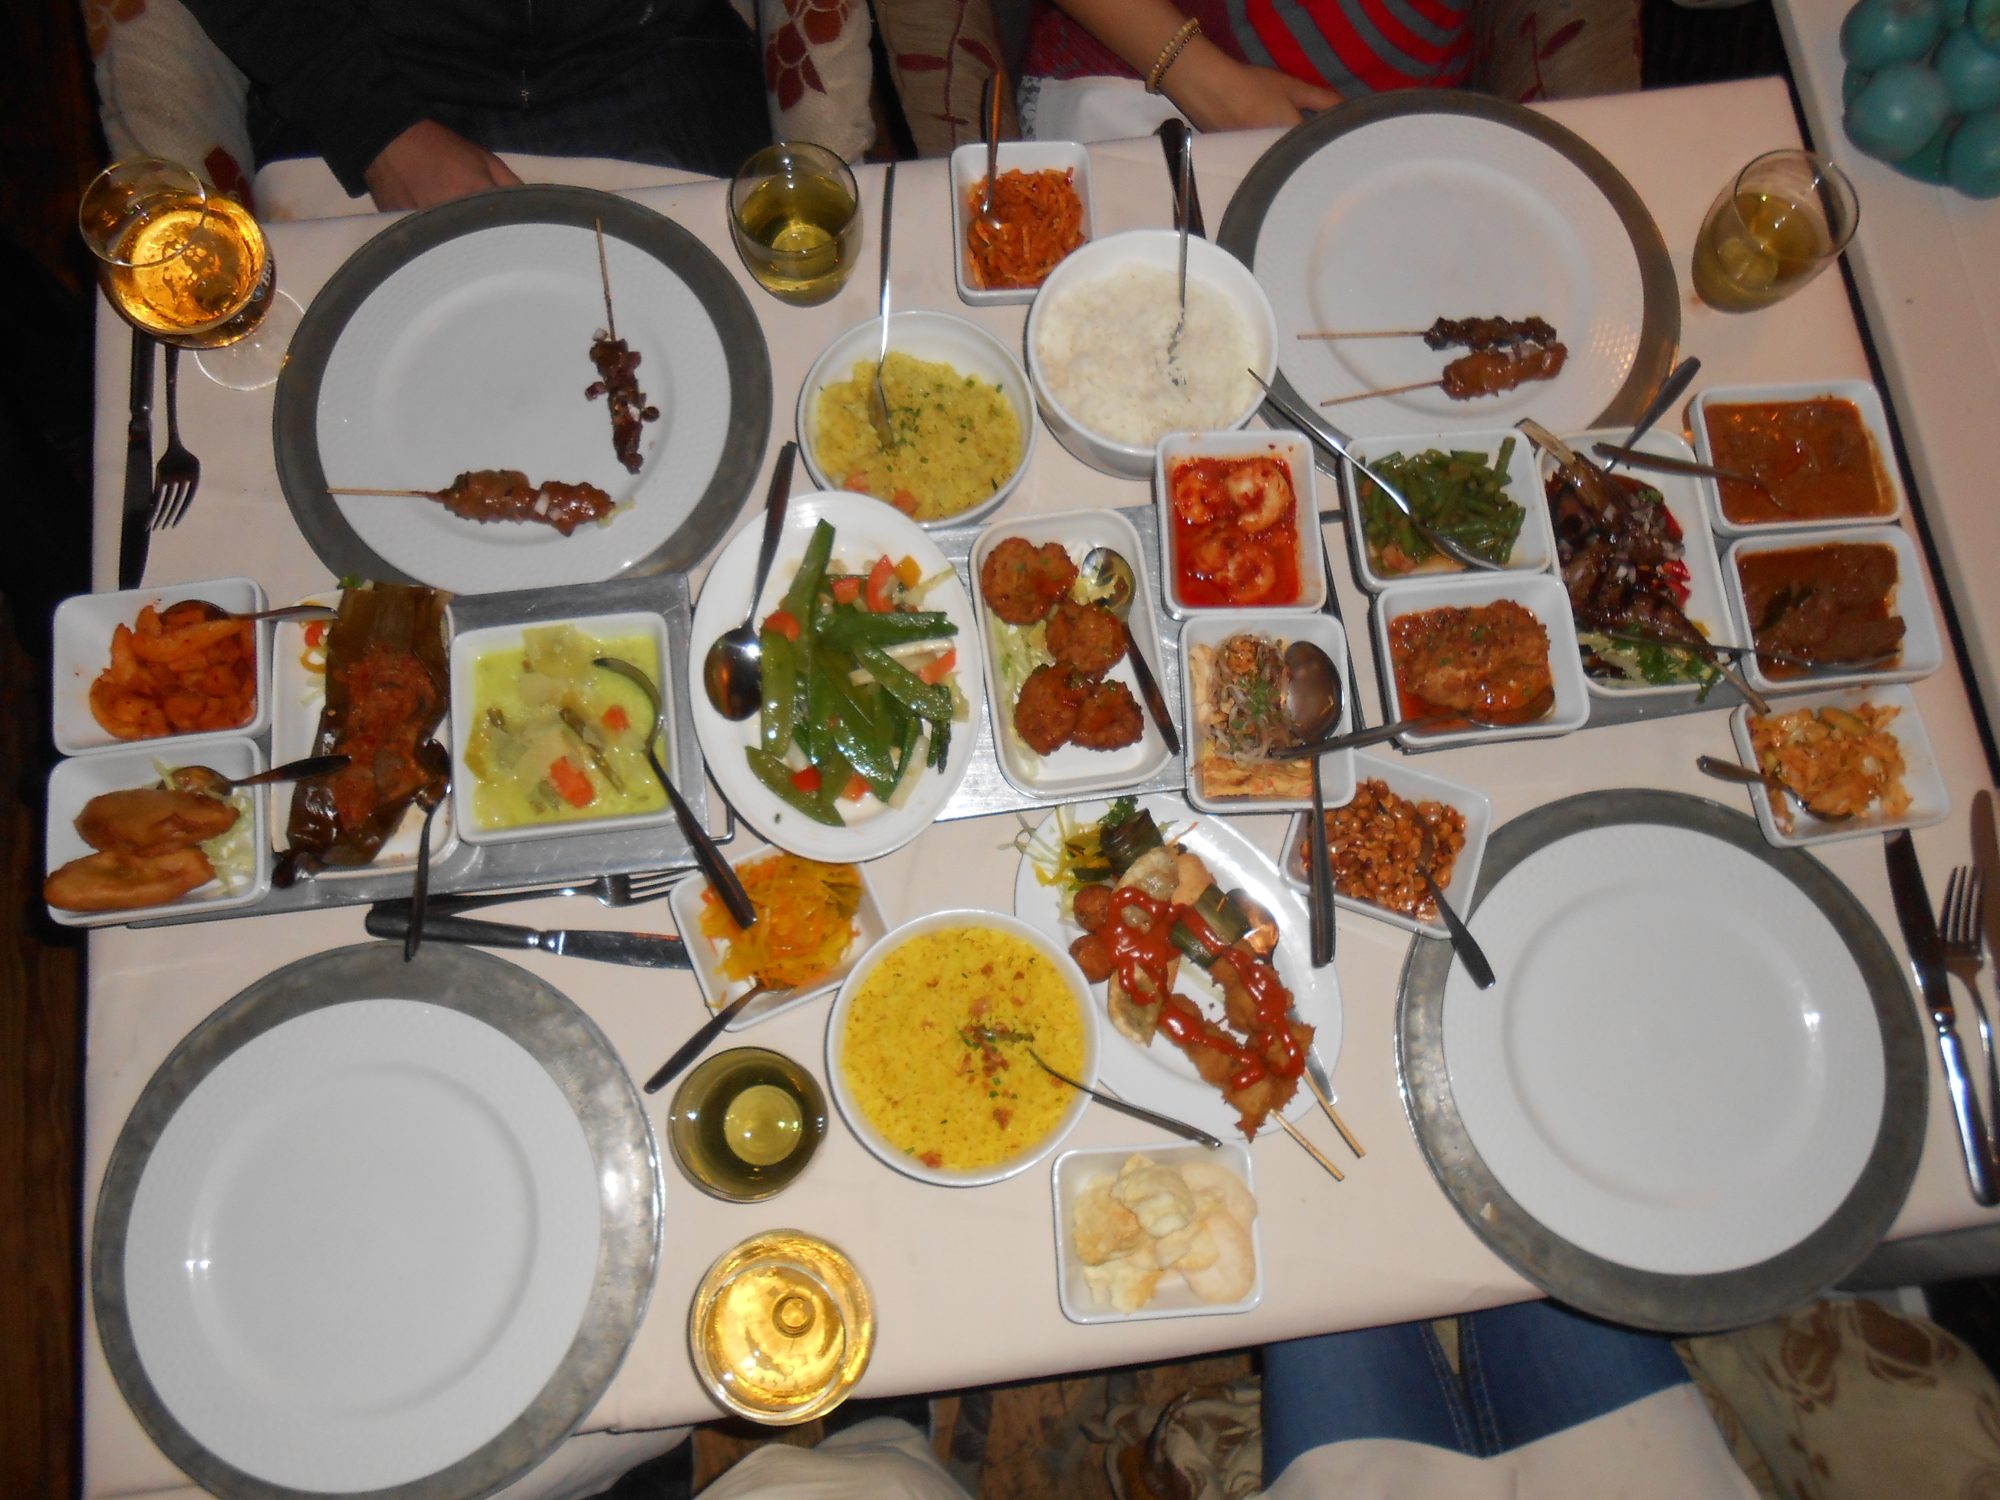 rijstaffel Dutch Indonesian cuisine with different plates 